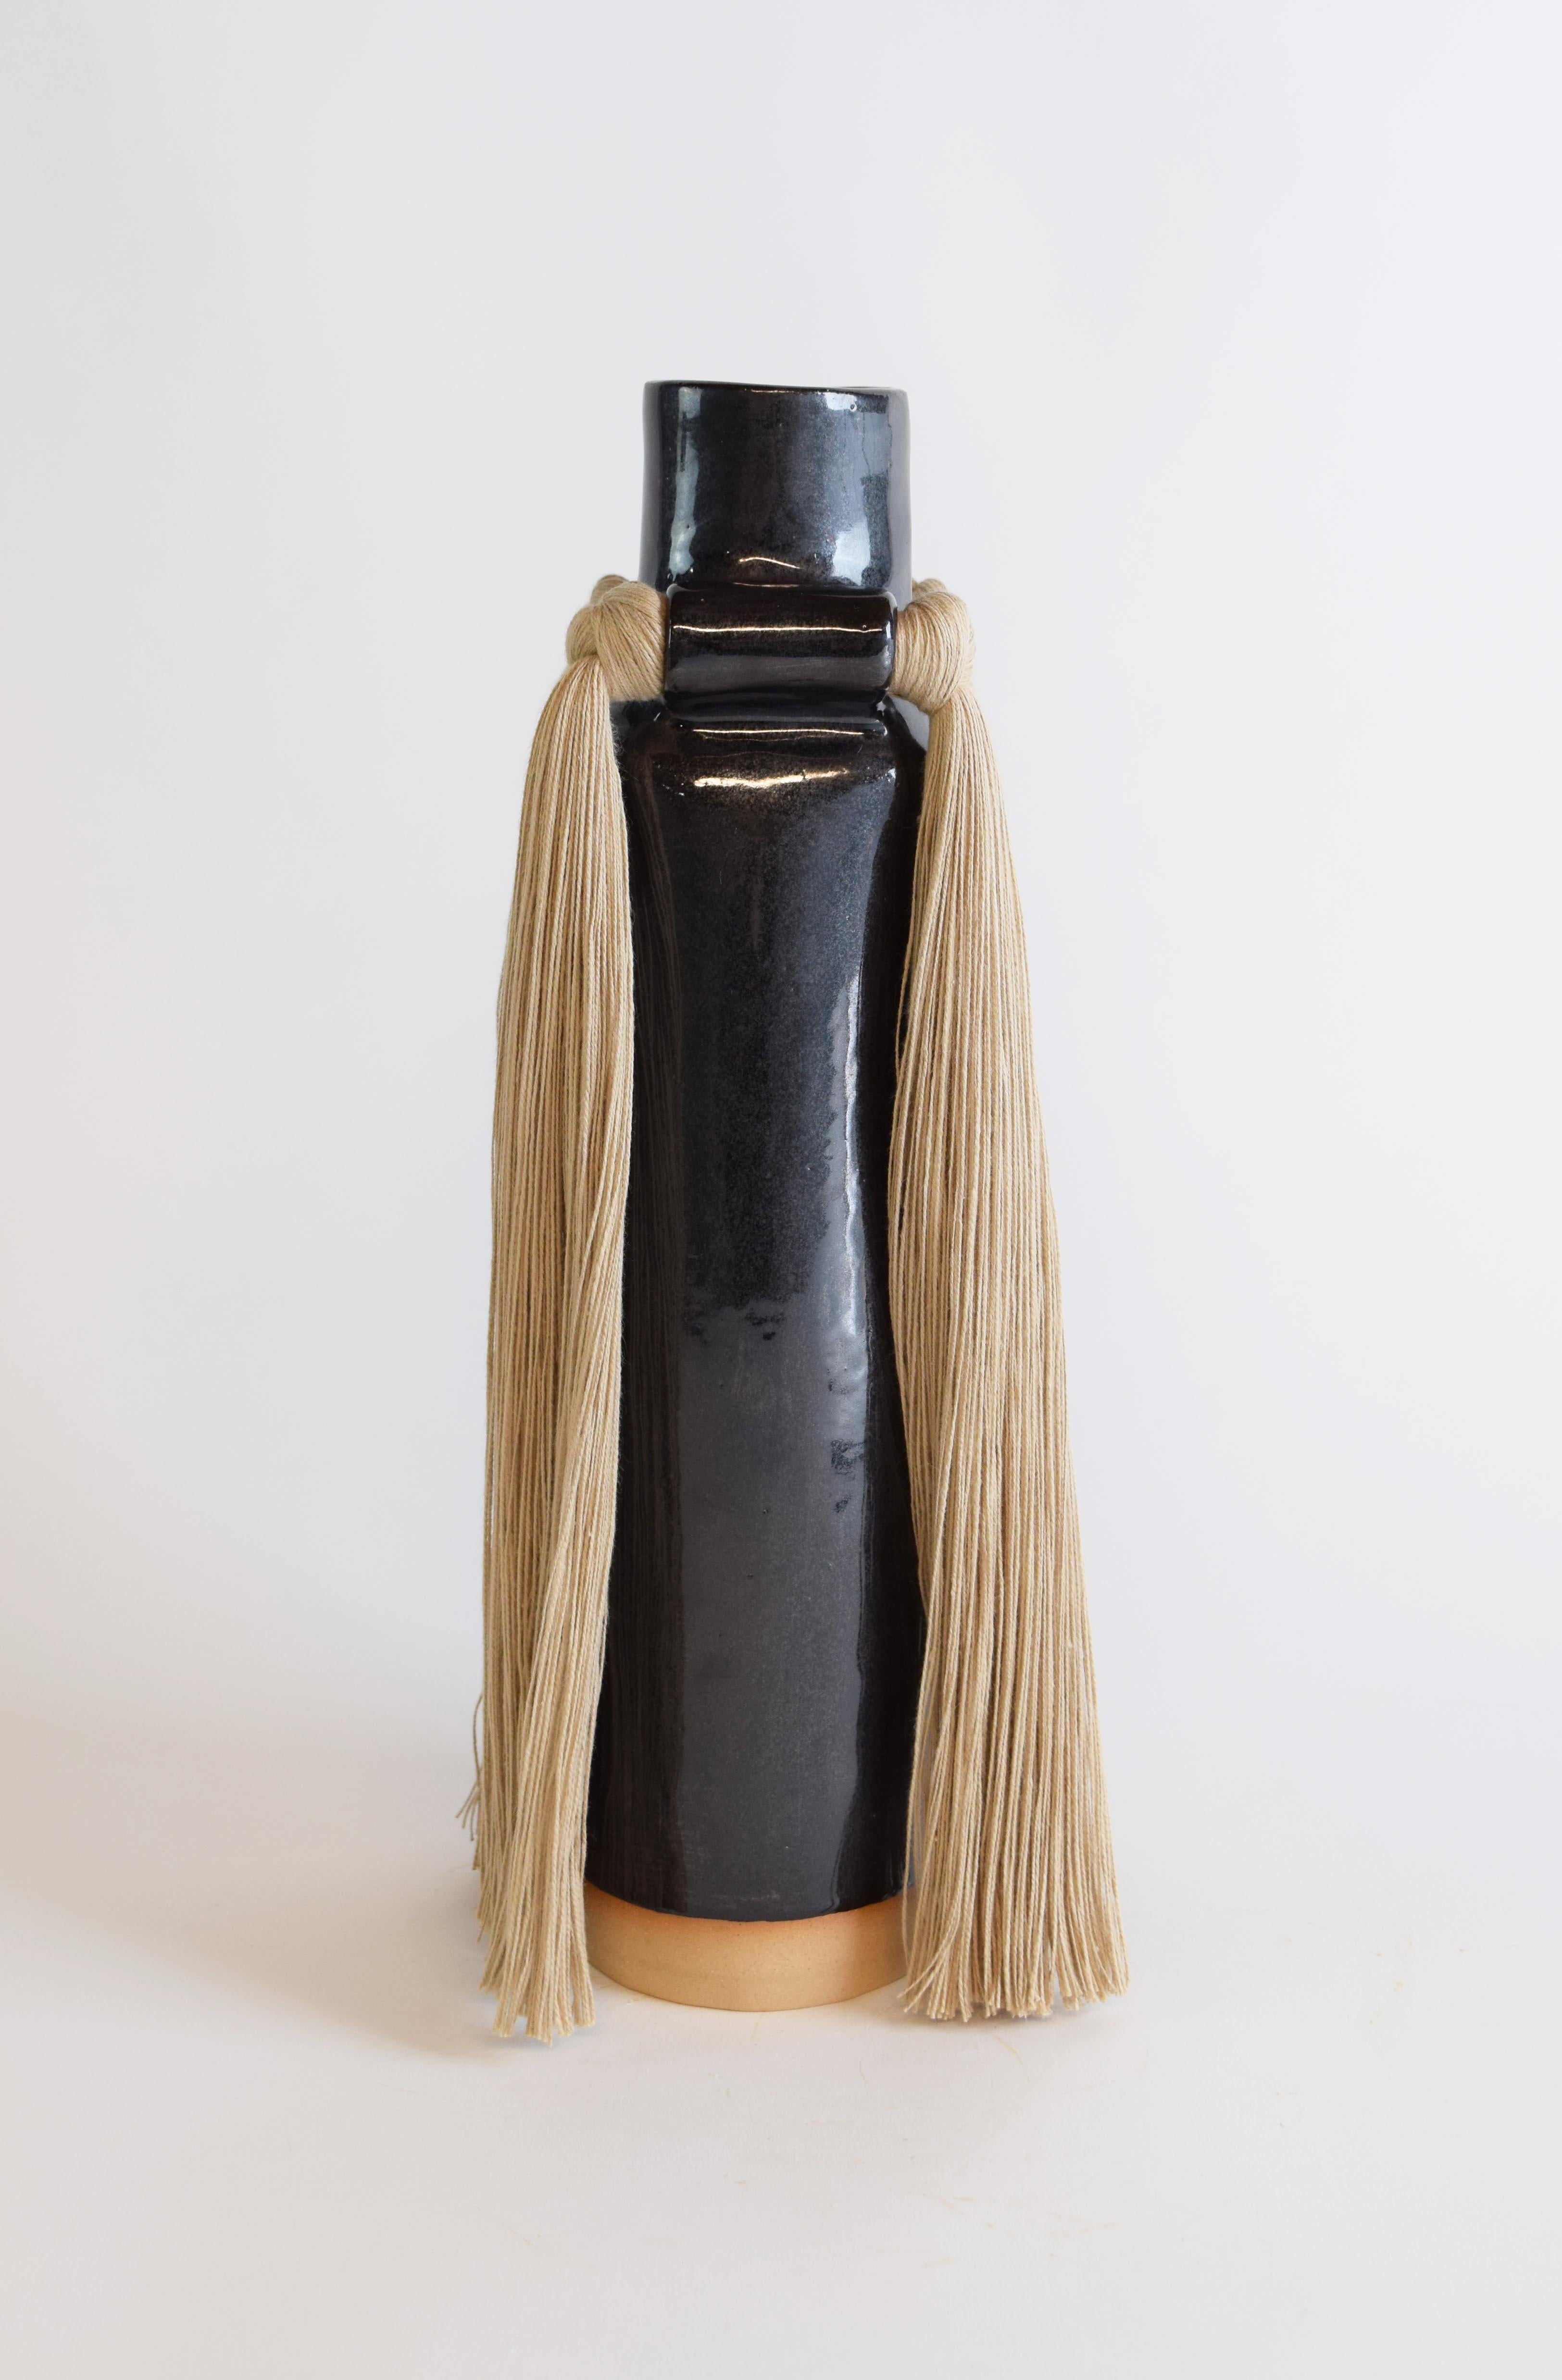 Organic Modern Handmade Ceramic Vase #703 in Black Glaze with Beige Cotton Fringe Detail For Sale